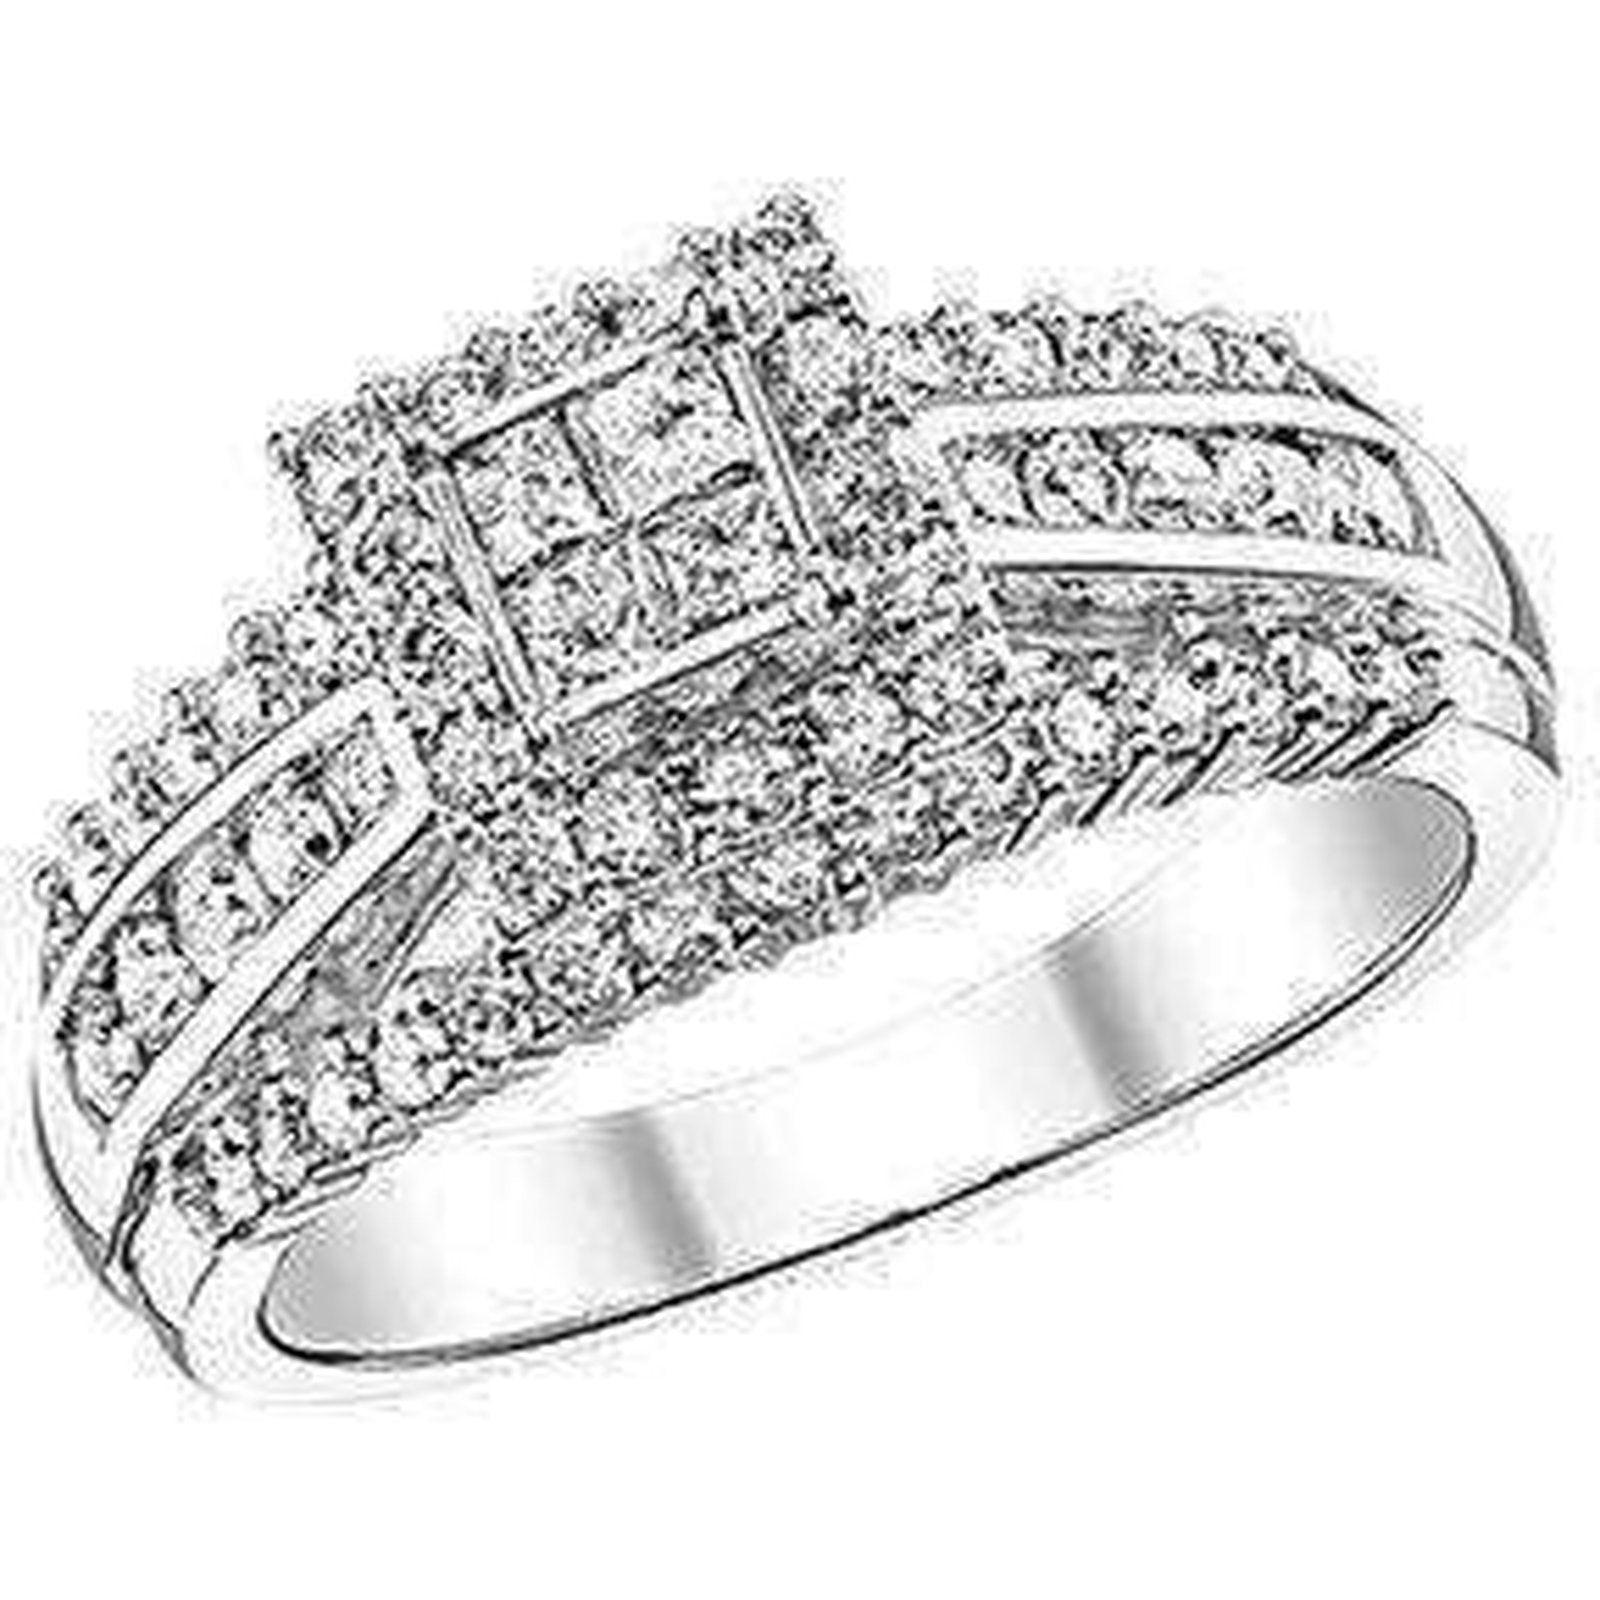 Beautiful Bride Engagement Ring Princess Cut Halo Double Band Diamond Ring 1ctw